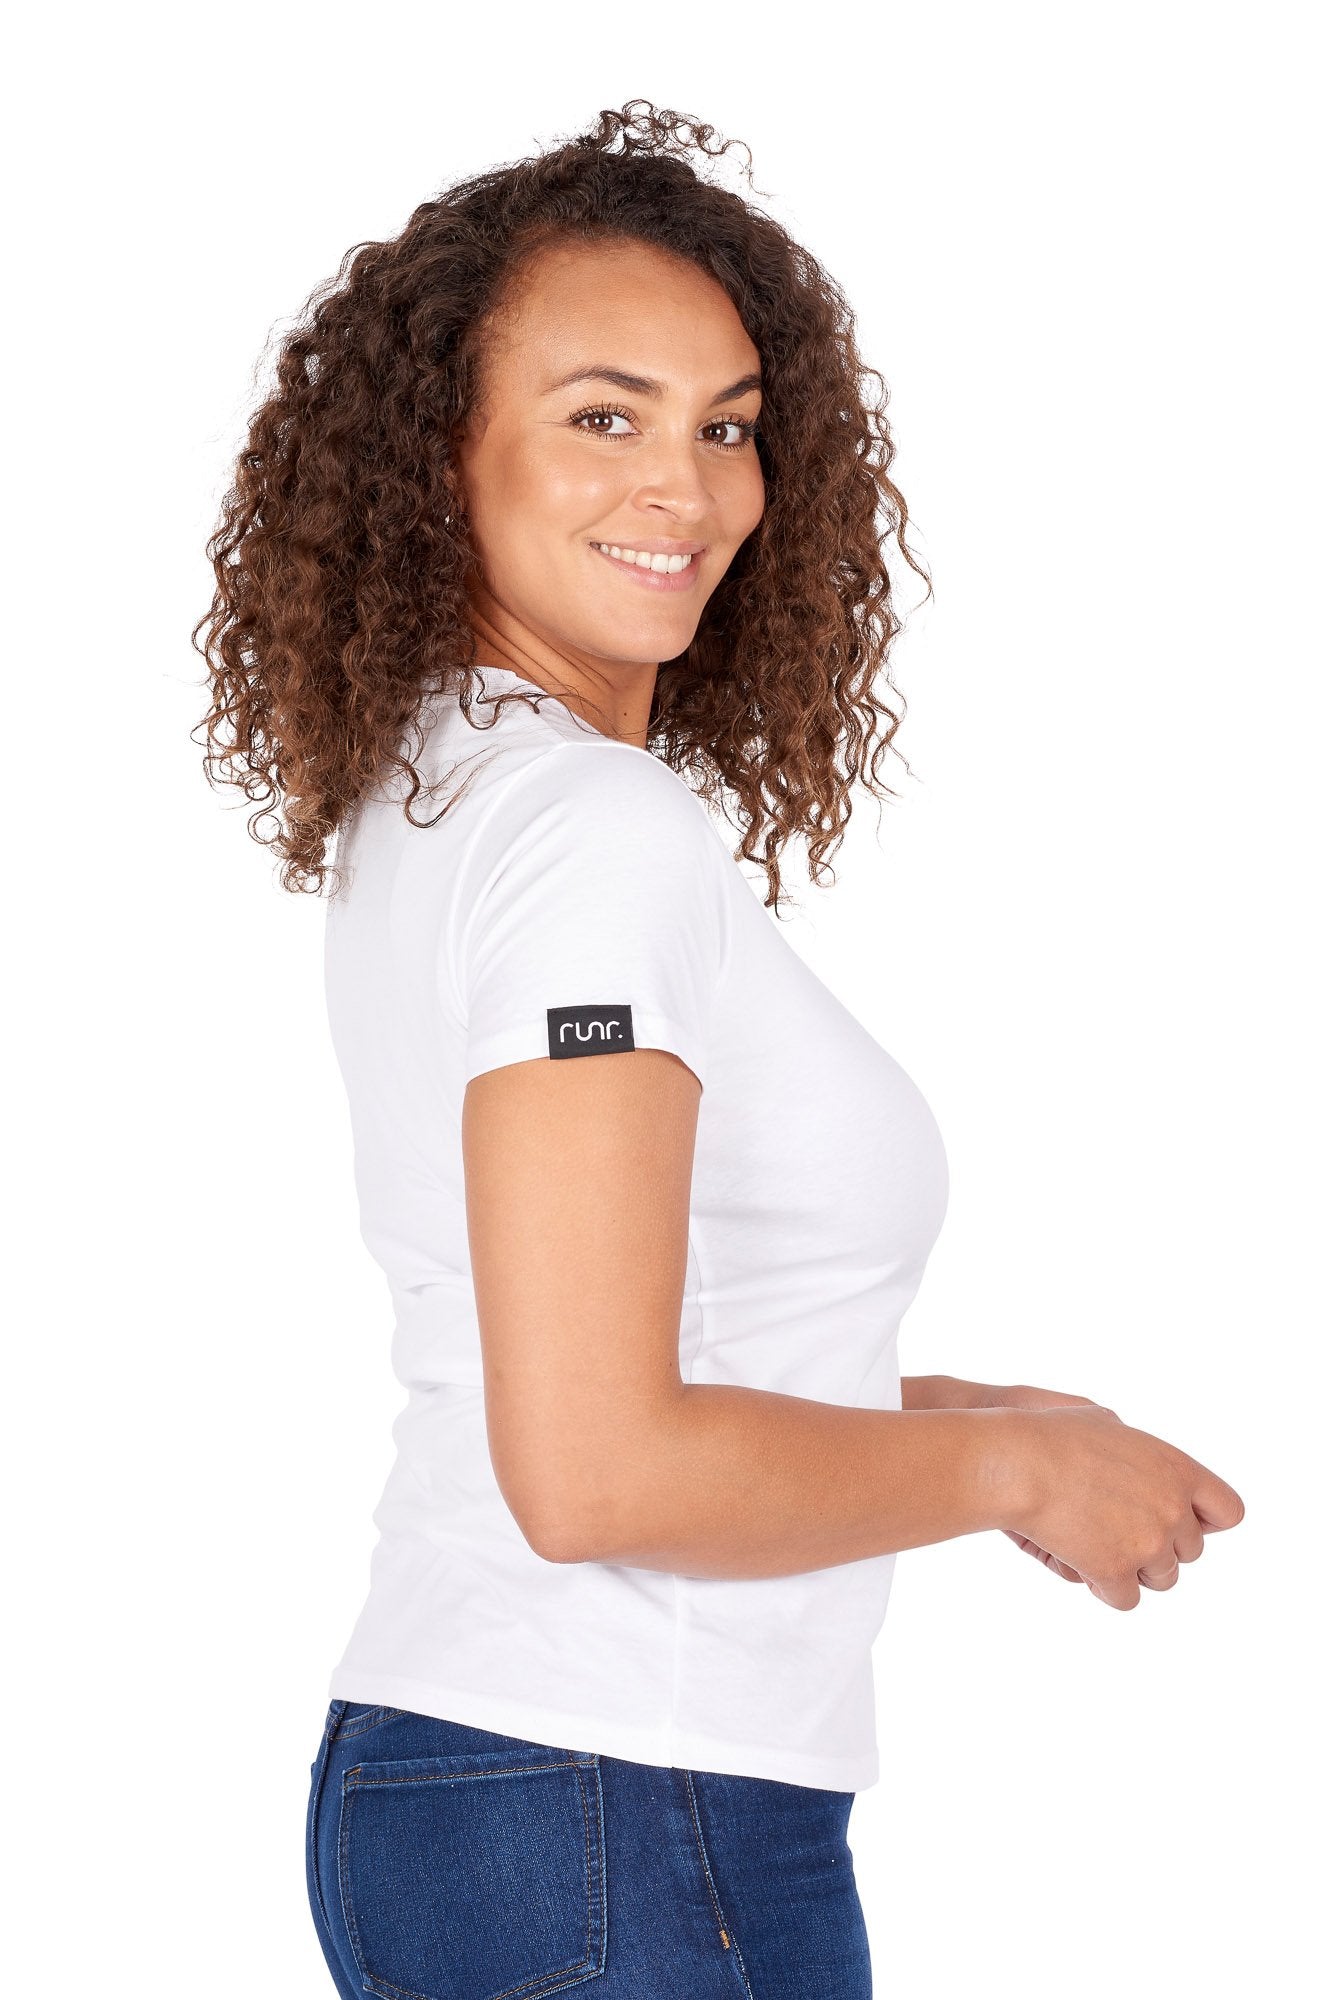 Women's Runr Elements T-Shirts - White